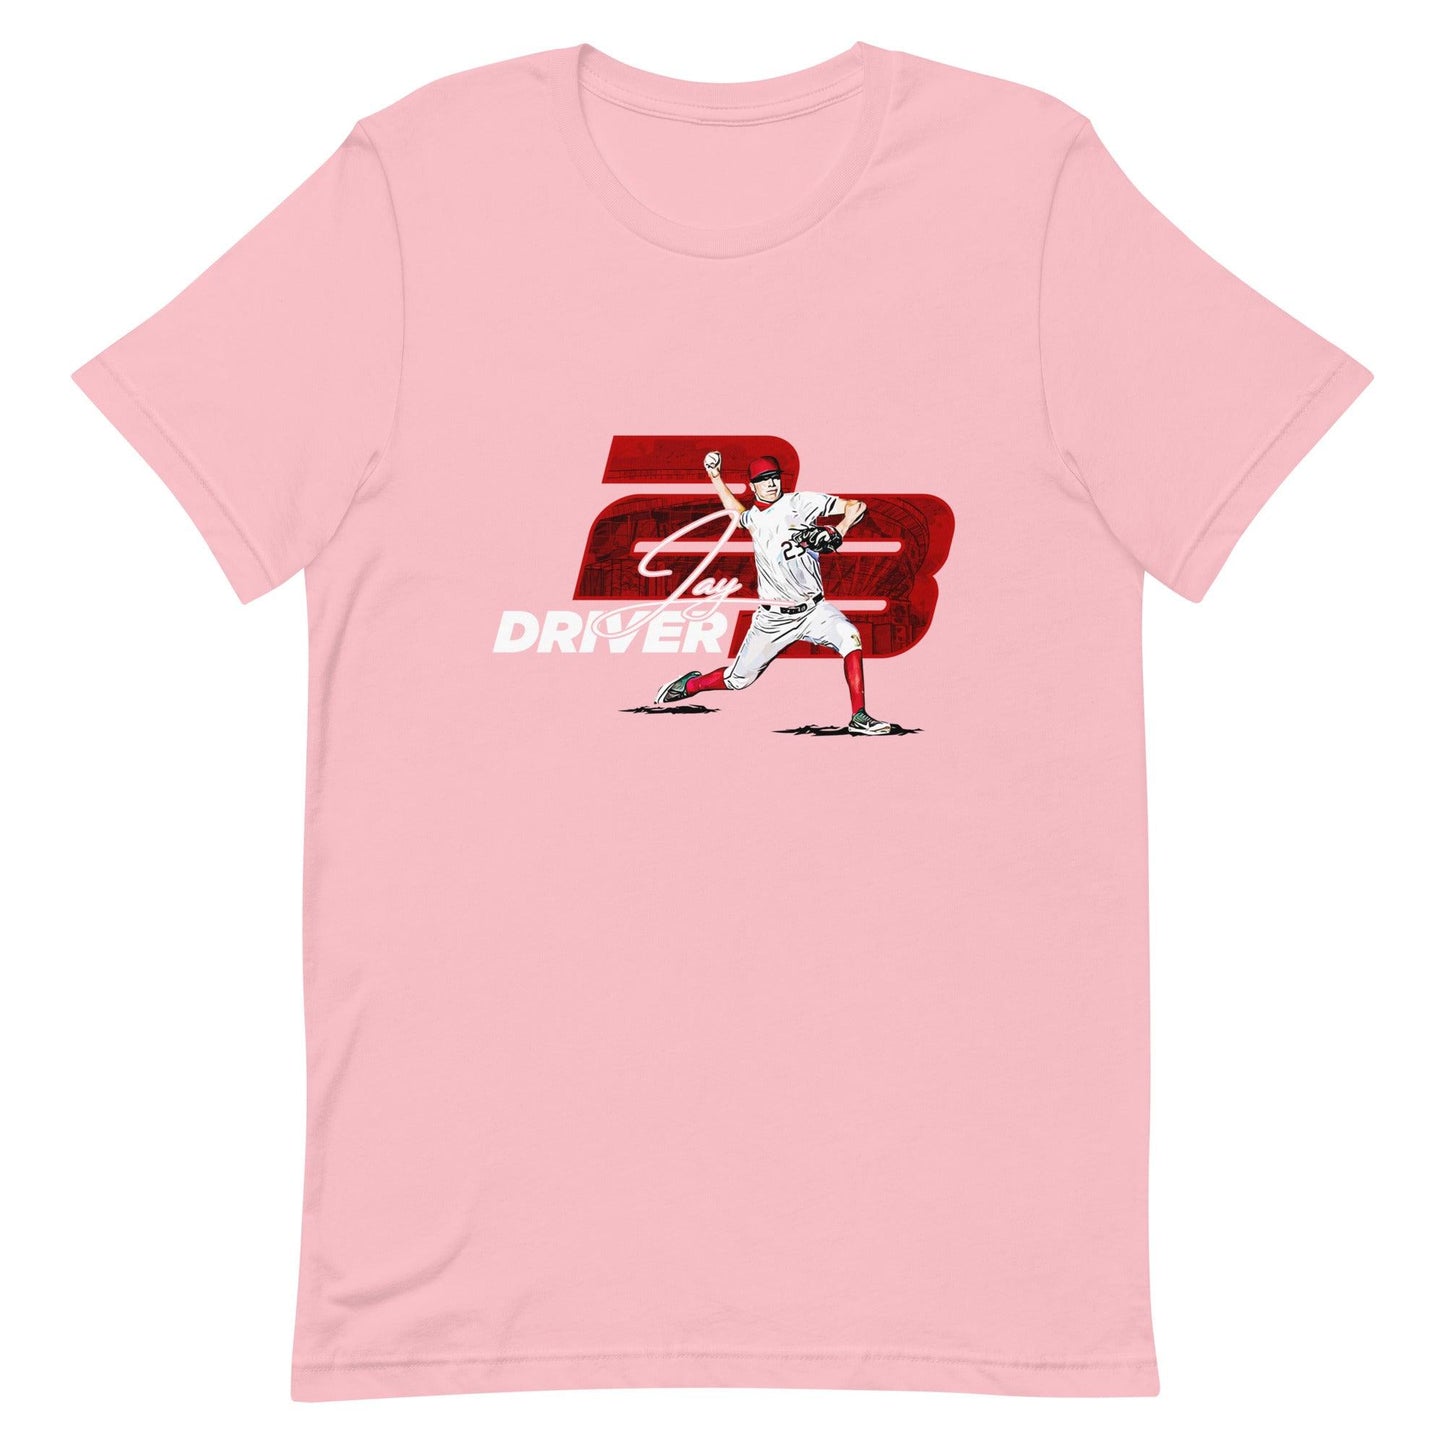 Jay Driver “Essential” t-shirt - Fan Arch